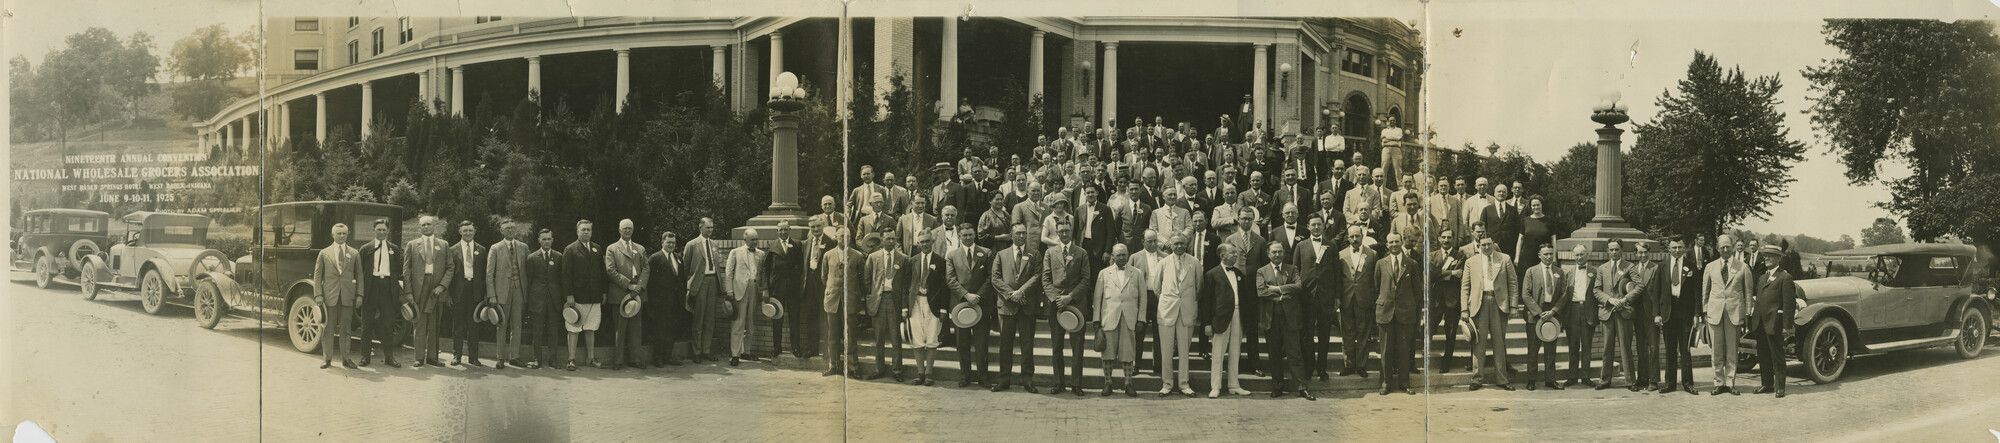 National Wholesale Grocers Association Convention, June 1925.